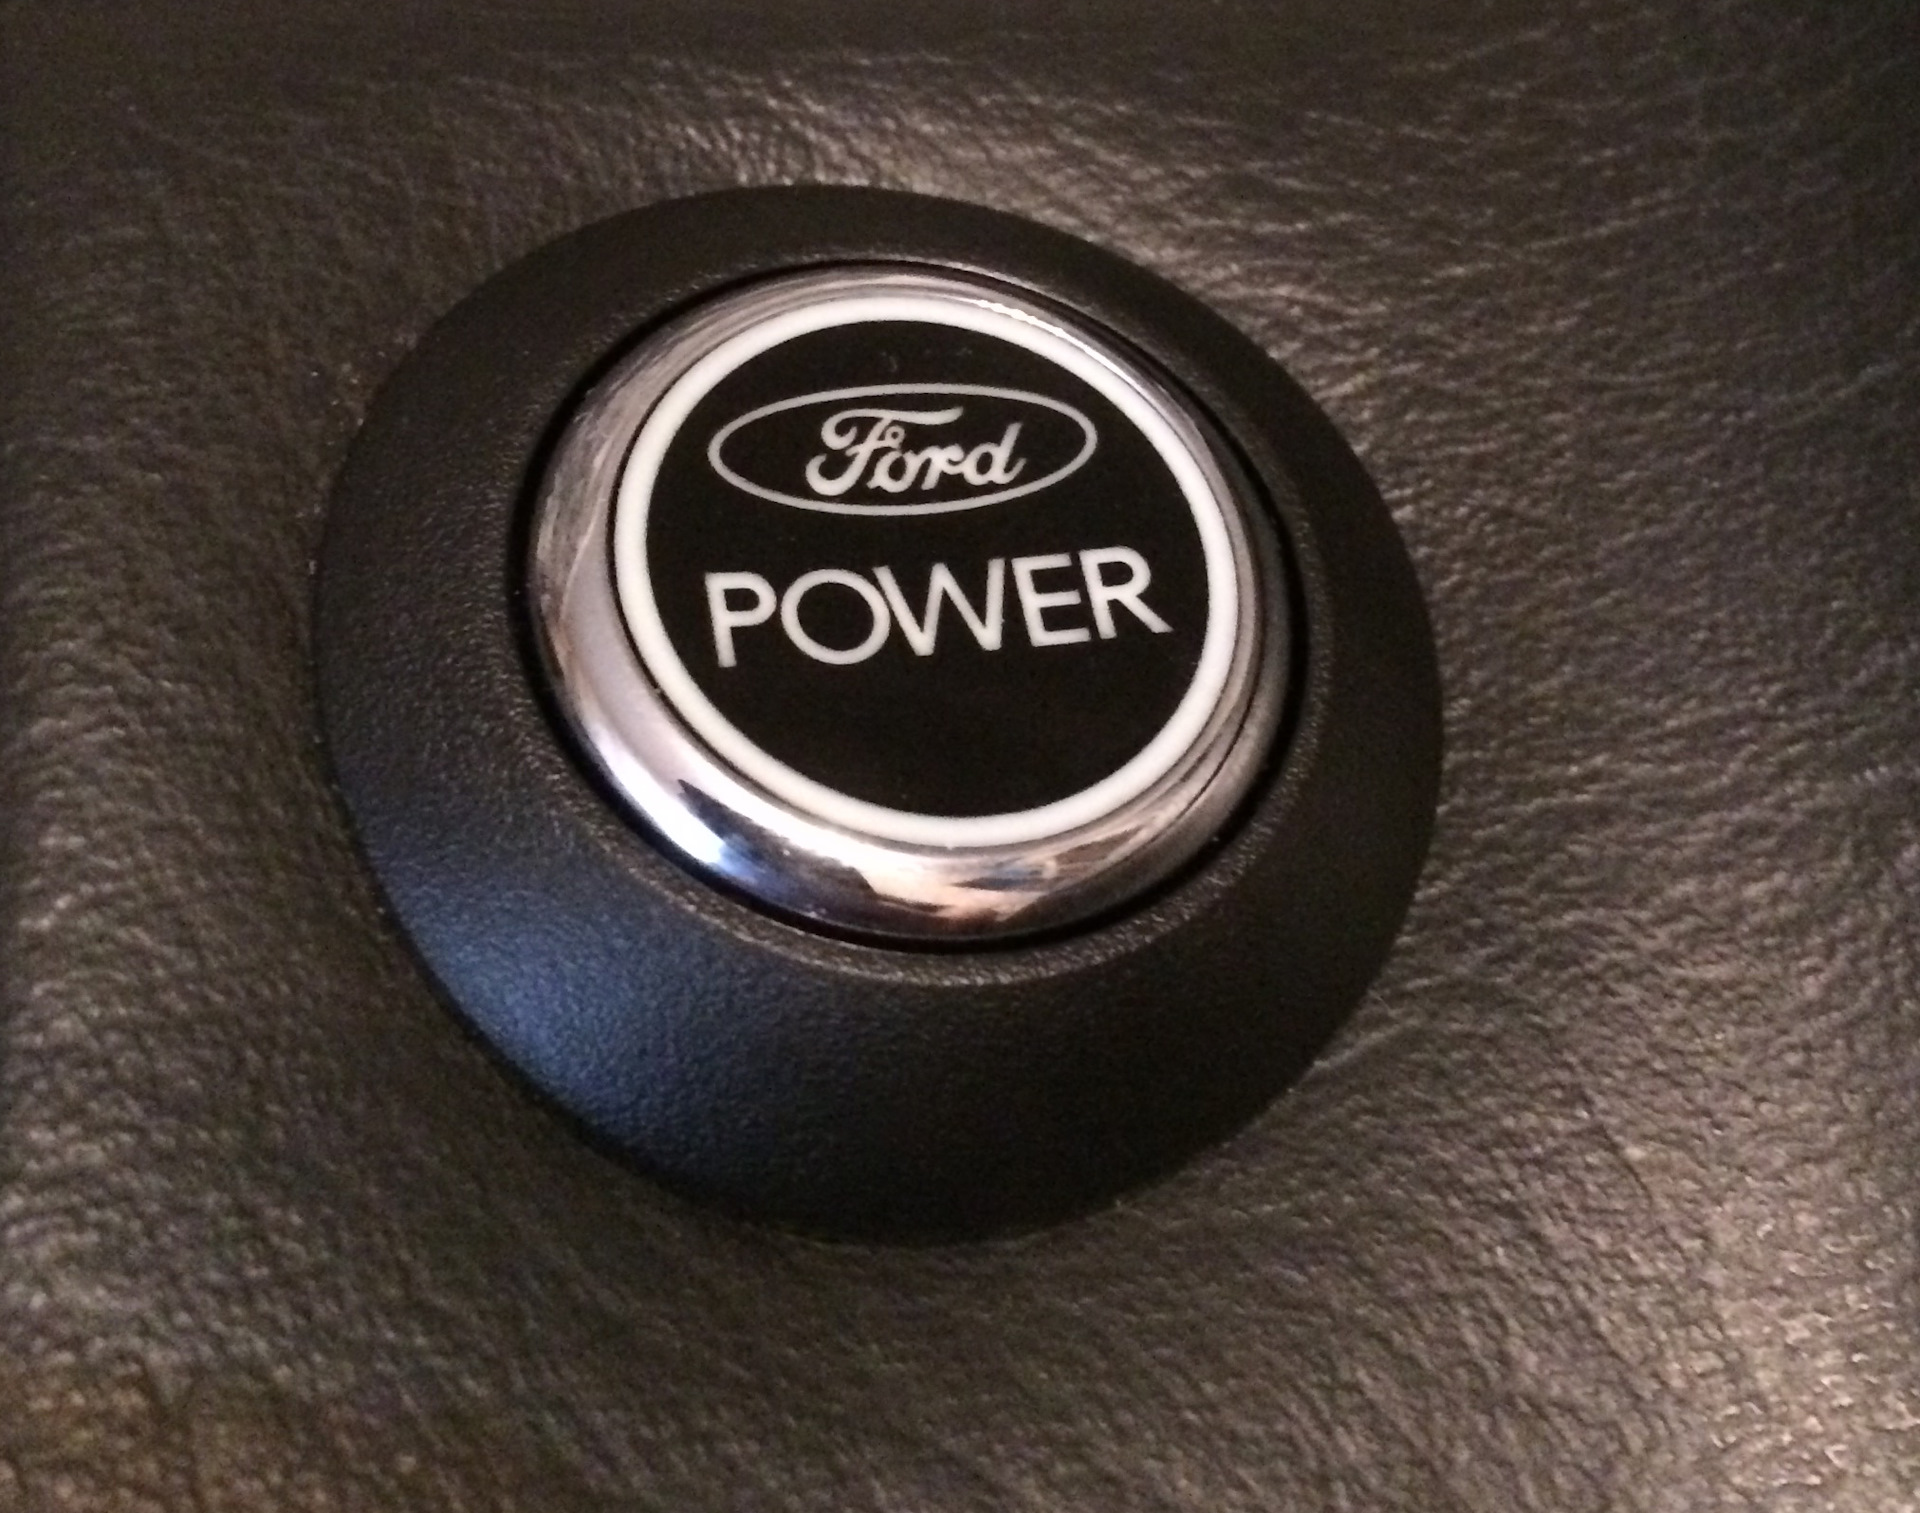 Старт стоп фокус 3. Кнопка Ford Power Focus 2. Кнопка start-stop Focus 3. Кнопка Power Ford Focus 3. Старт стоп Форд фокус 3.